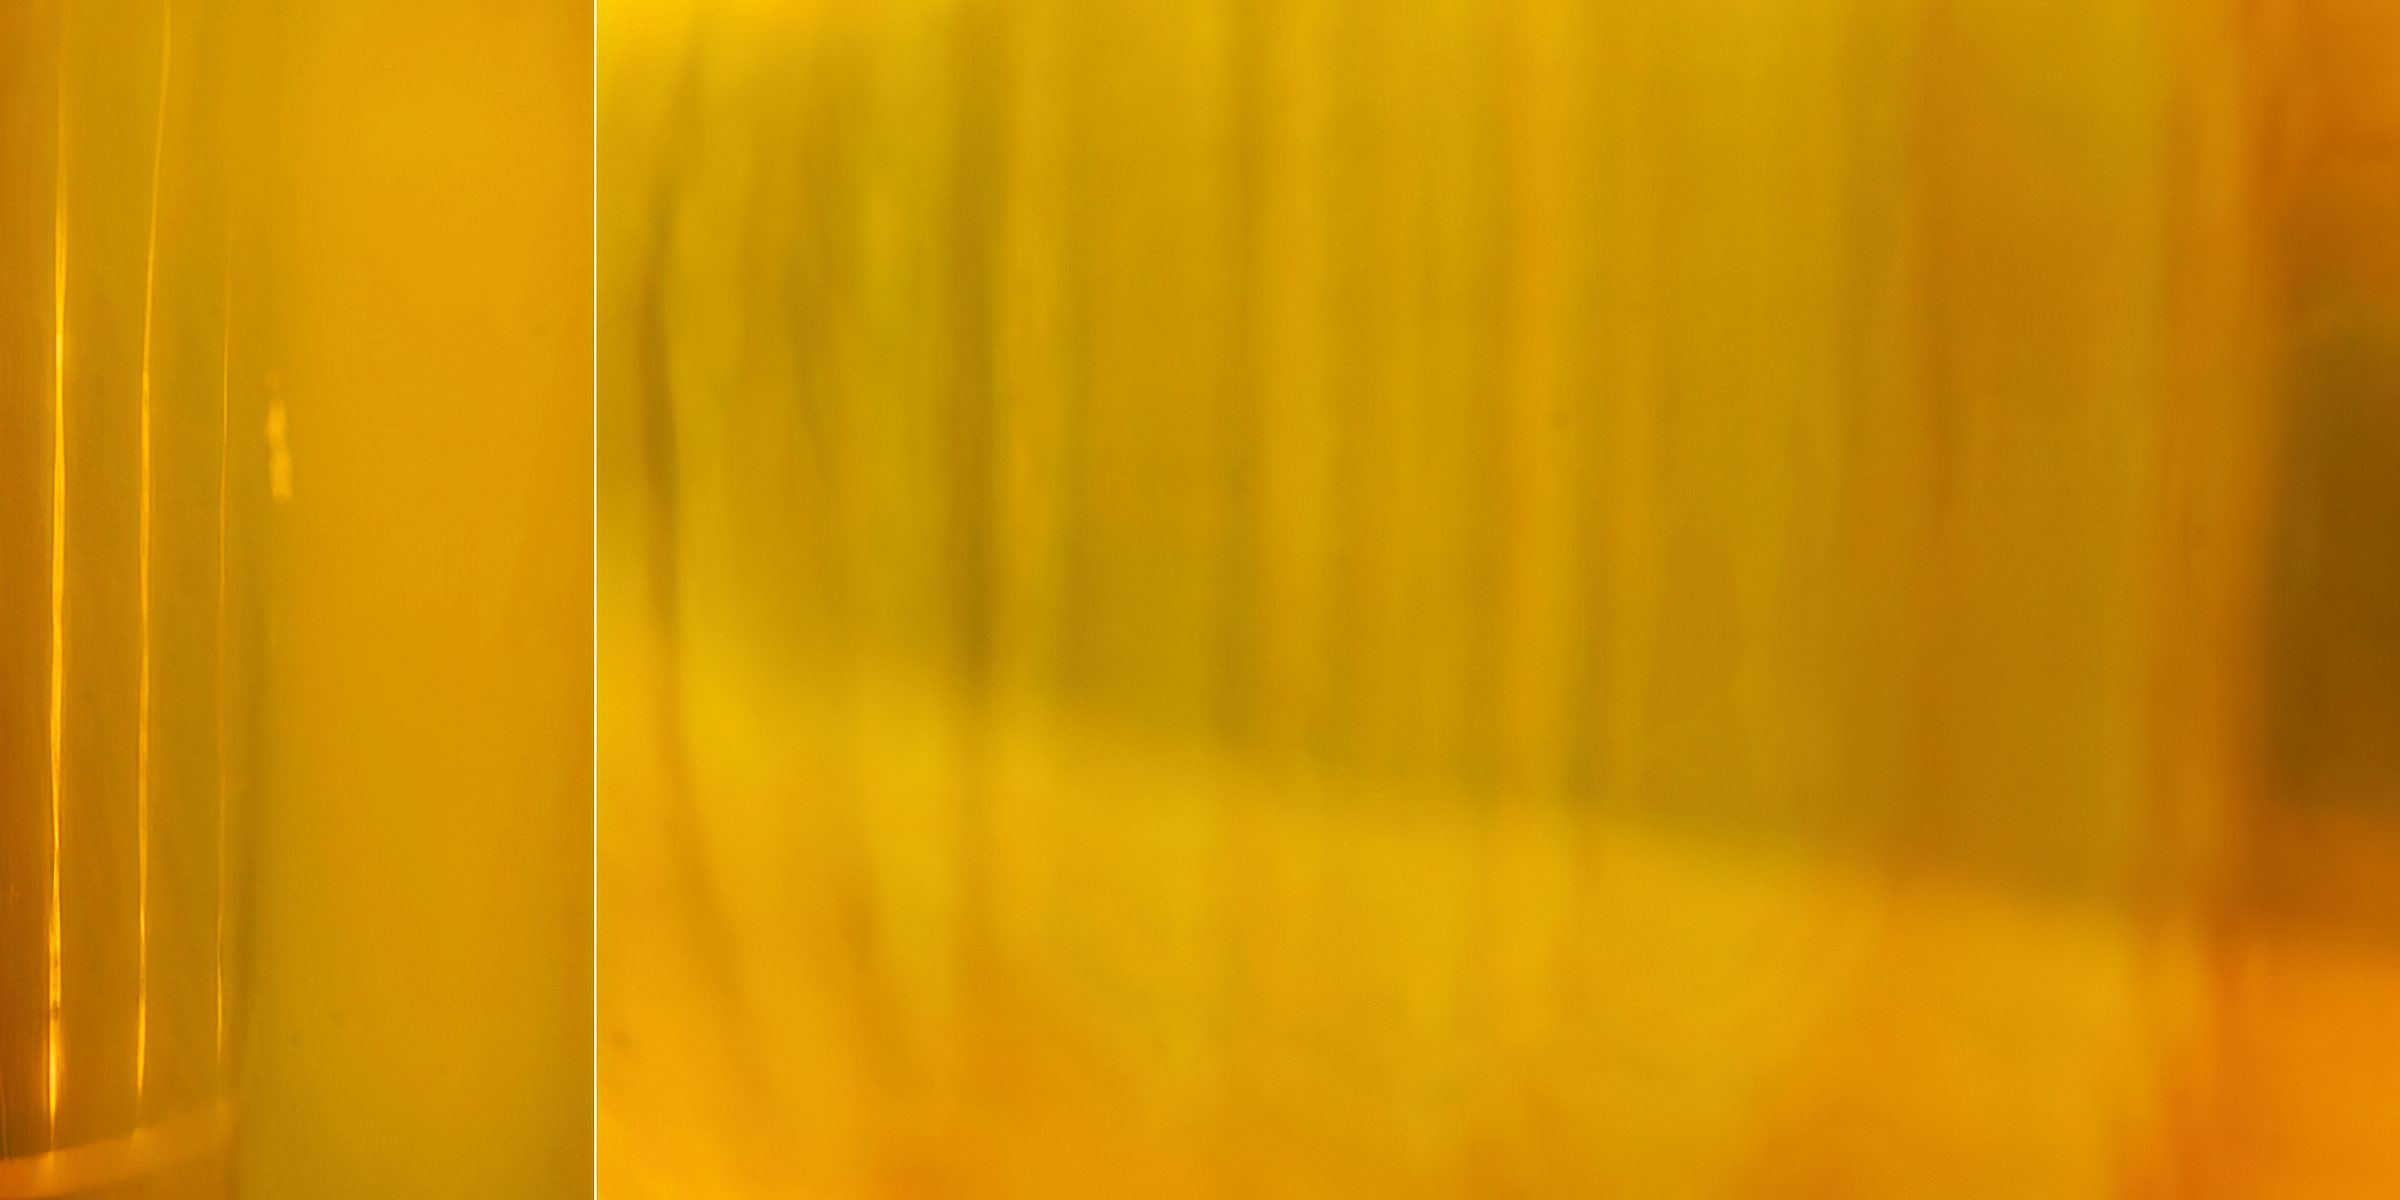 fotografie-stuttgart-michael-diehl-photography-linien-horizontal-gelb-beige